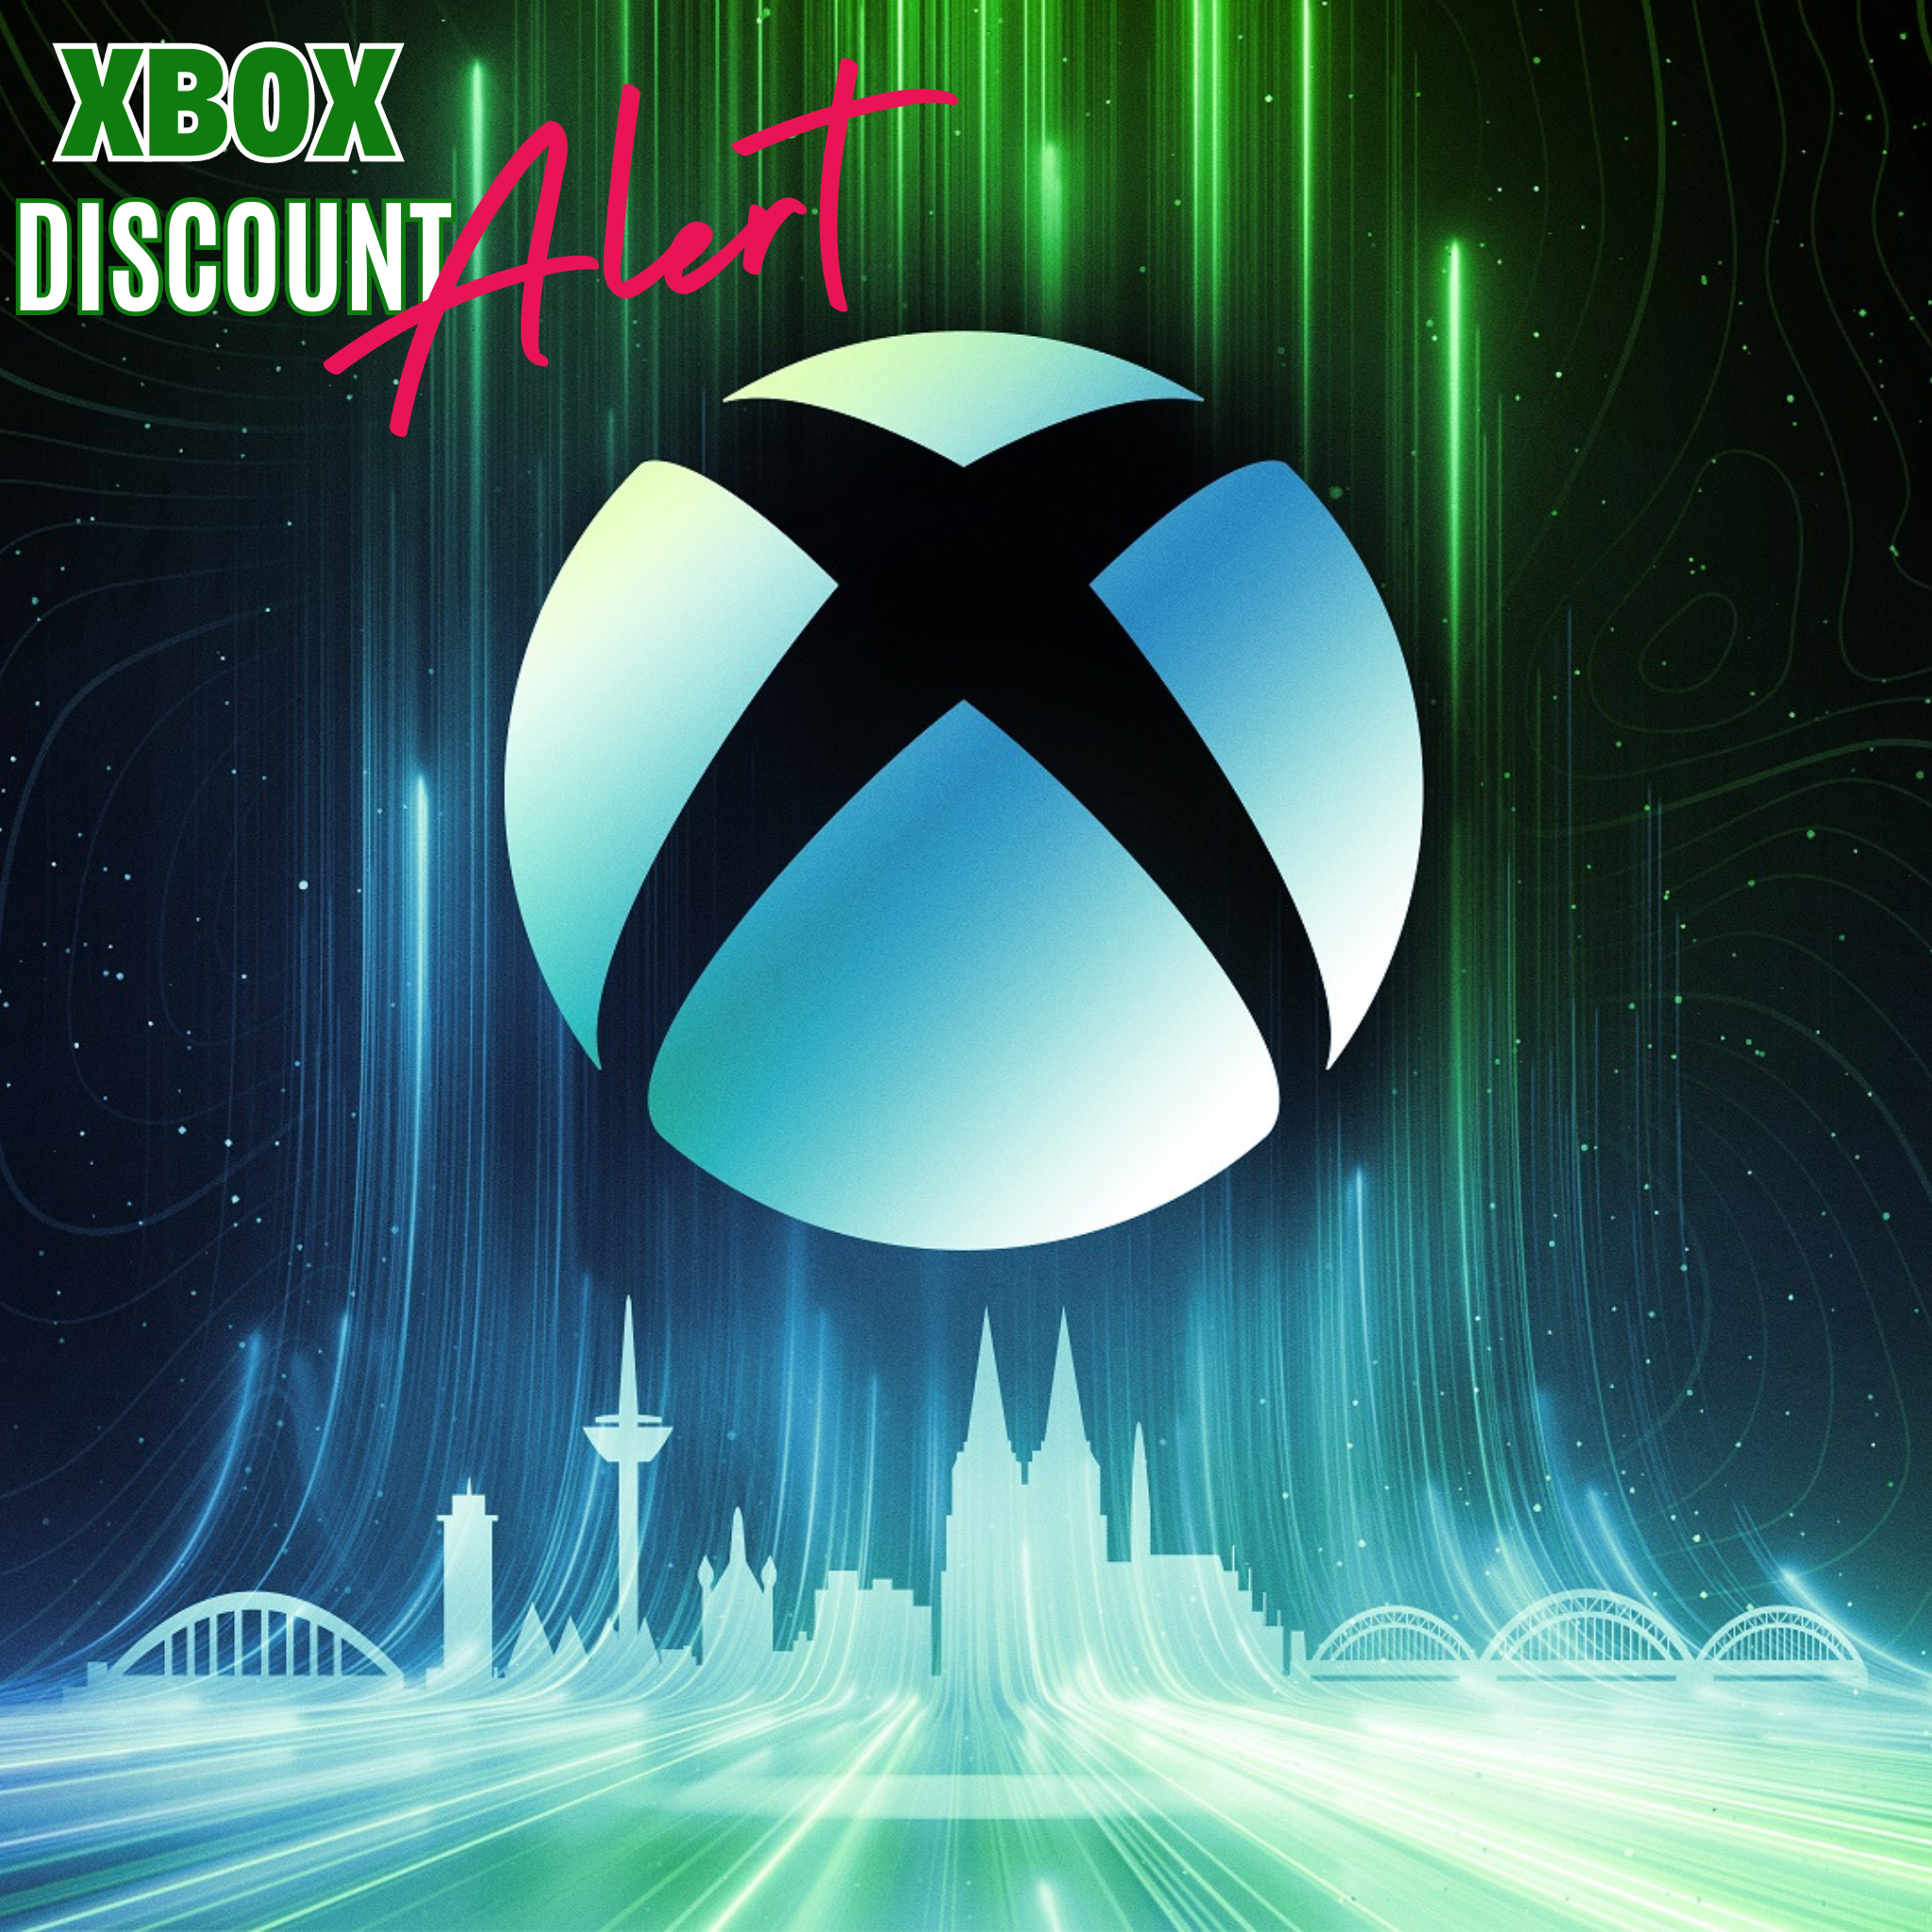 Xbox Discount Alert